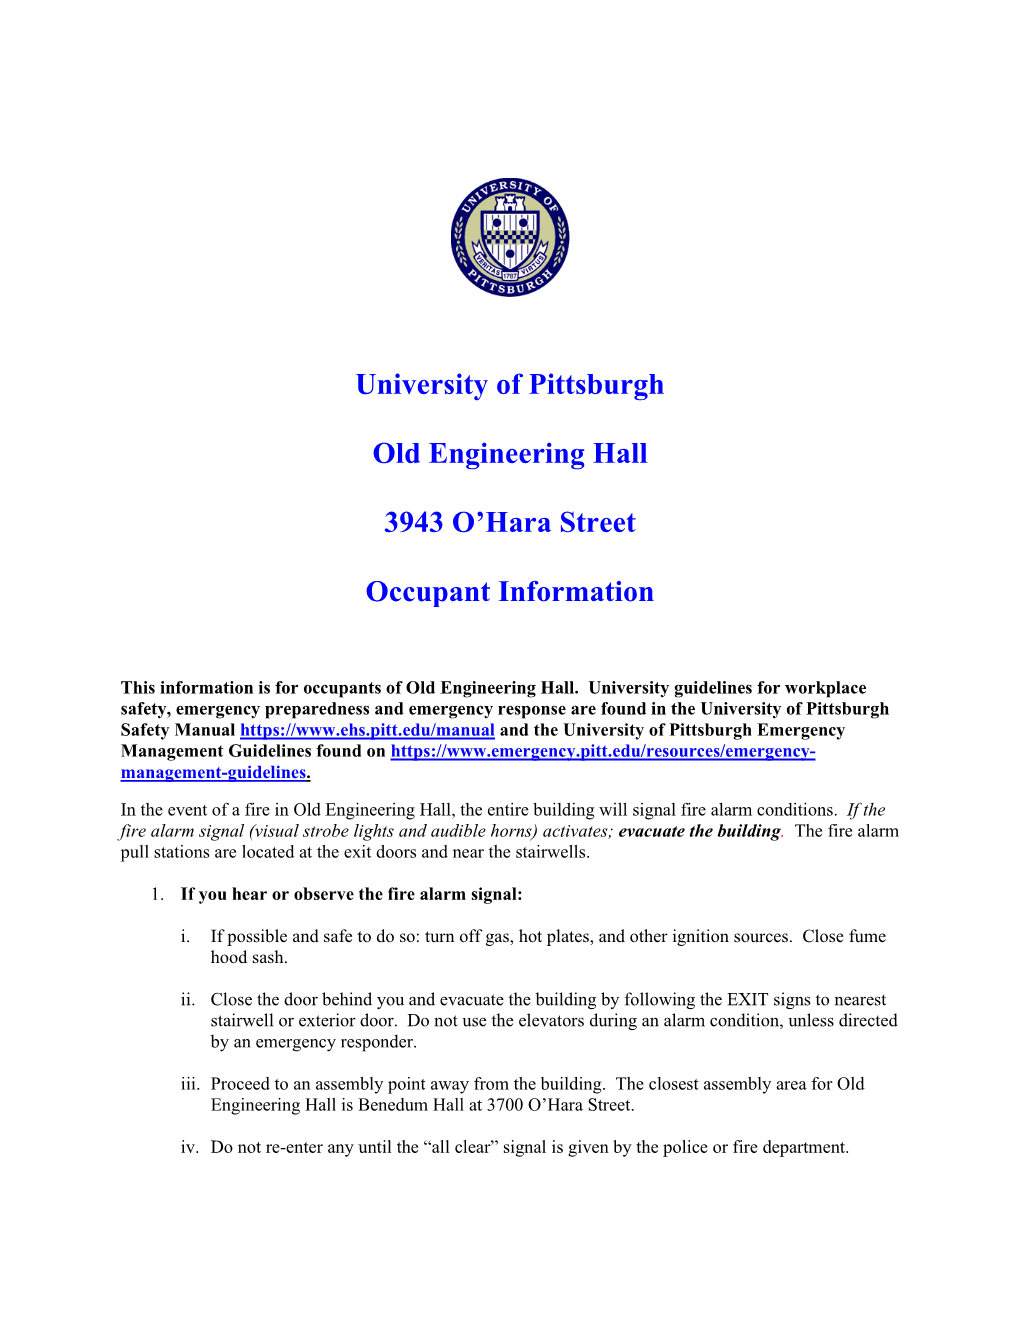 University of Pittsburgh Old Engineering Hall 3943 O'hara